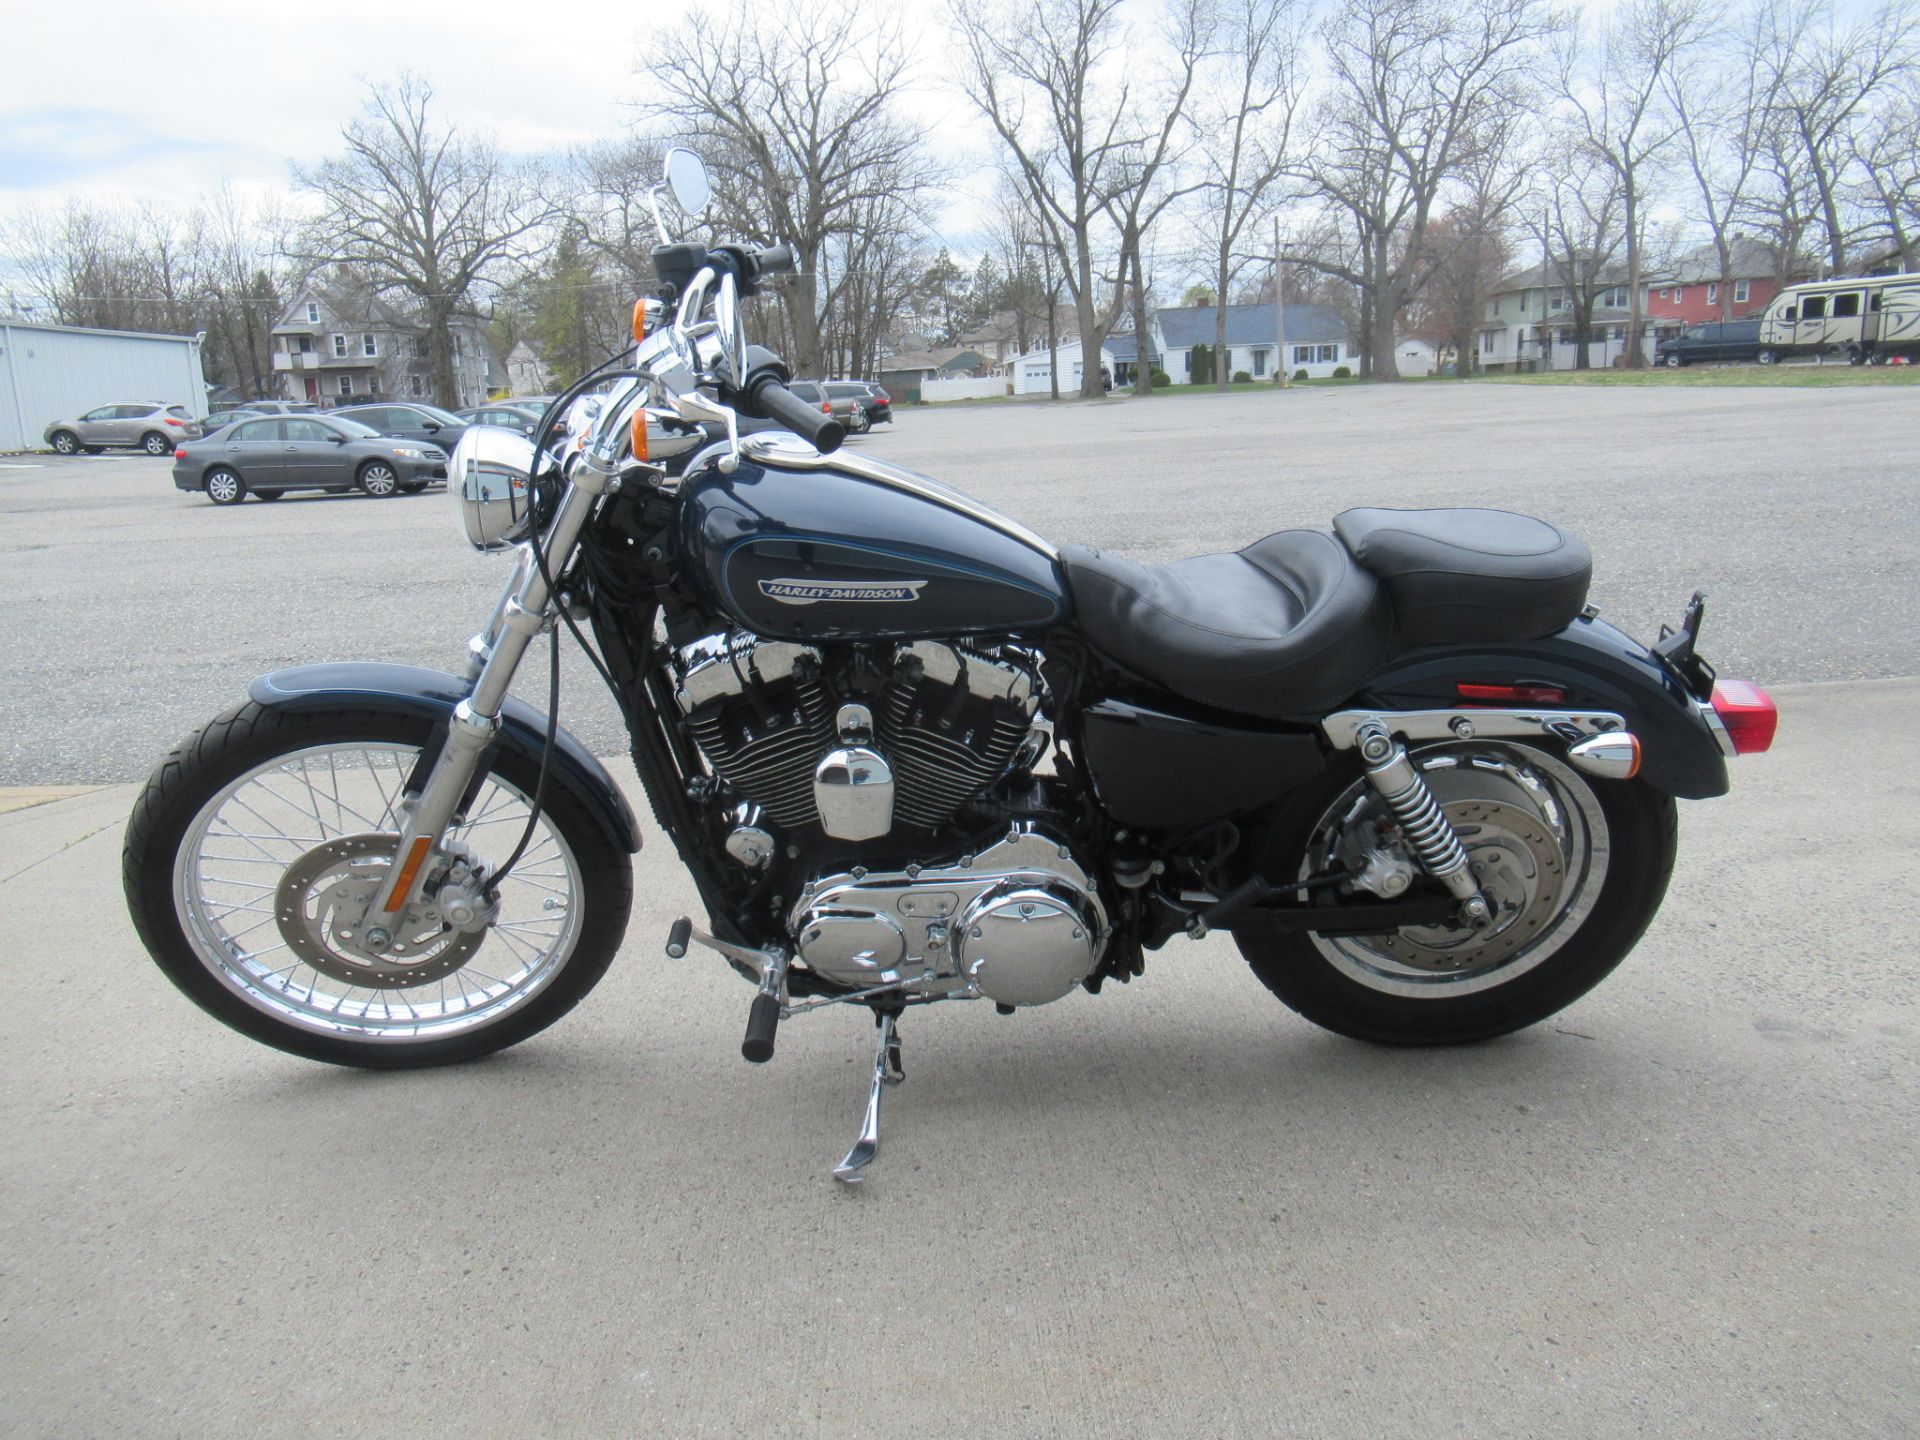 2008 Harley-Davidson Sportster® 1200 Custom in Springfield, Massachusetts - Photo 4